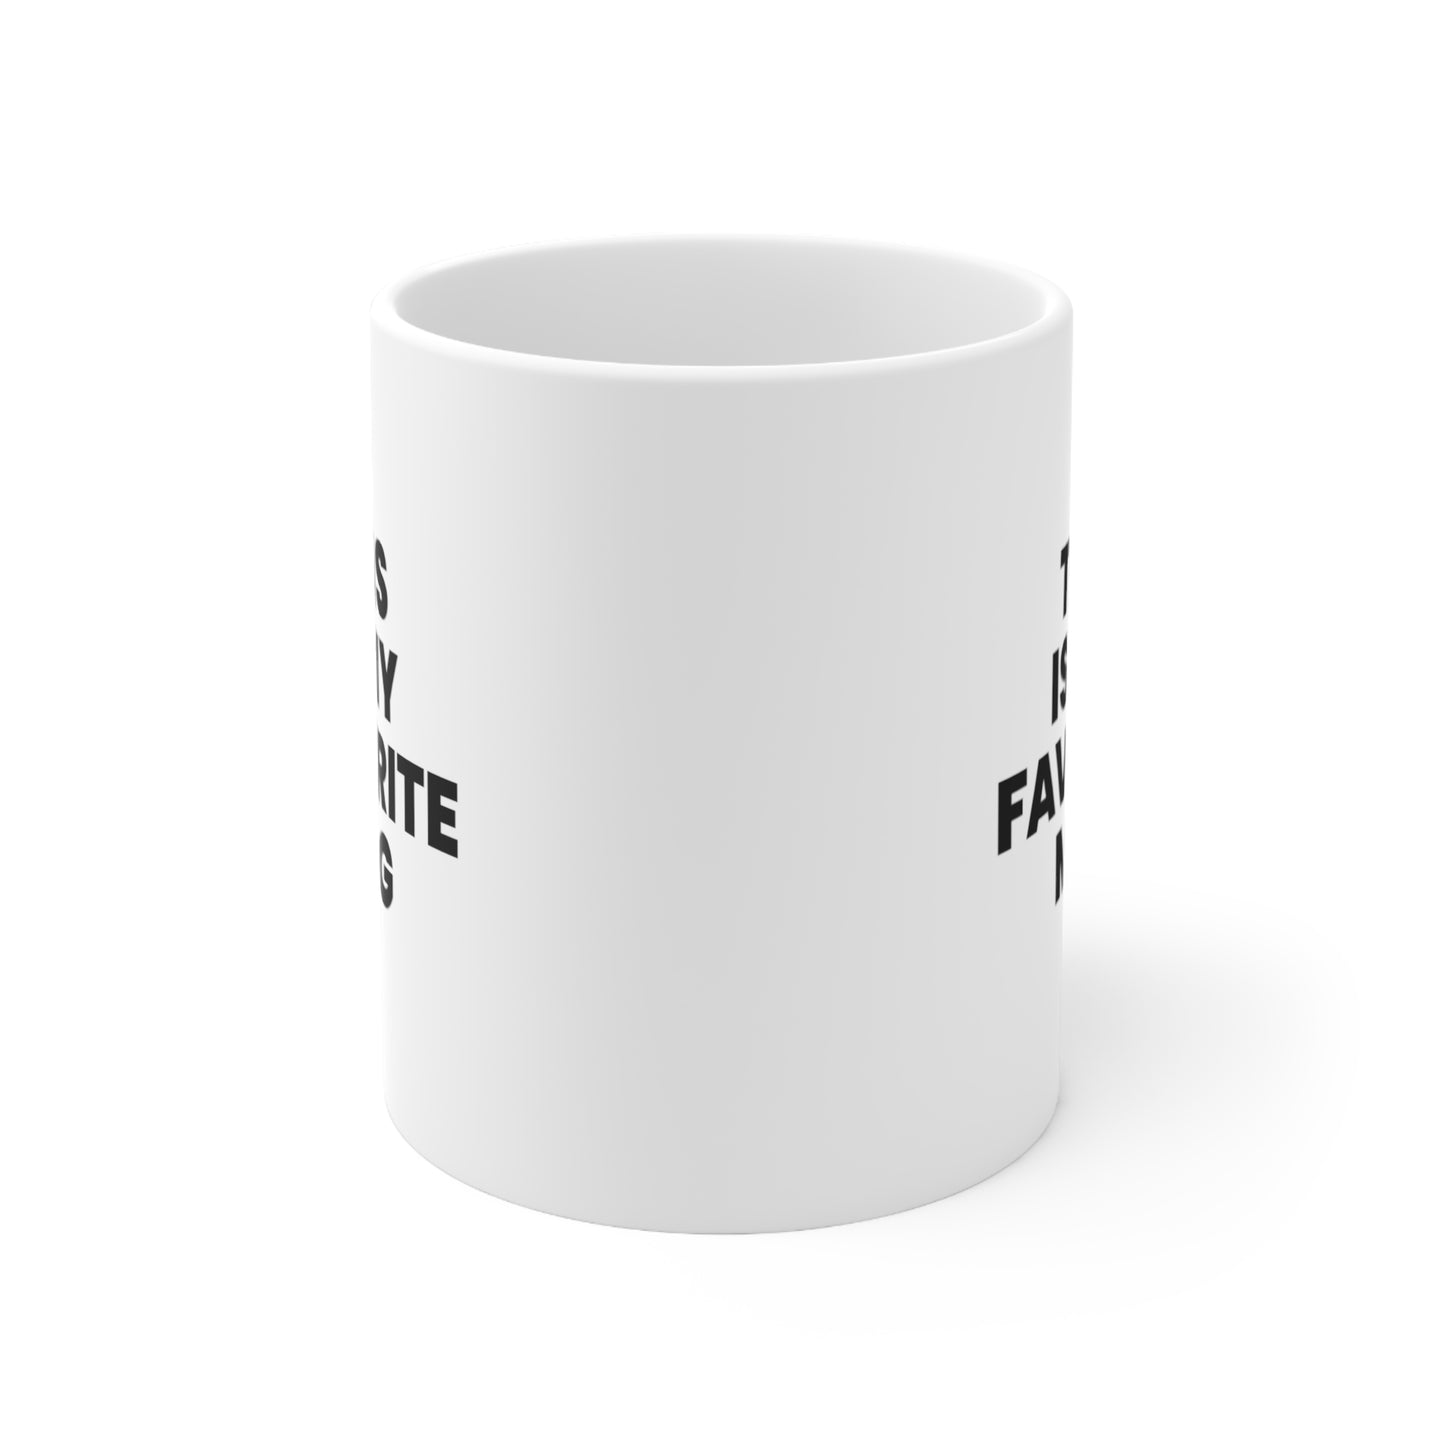 This Is My Favorite Mug Coffee Cup 11oz